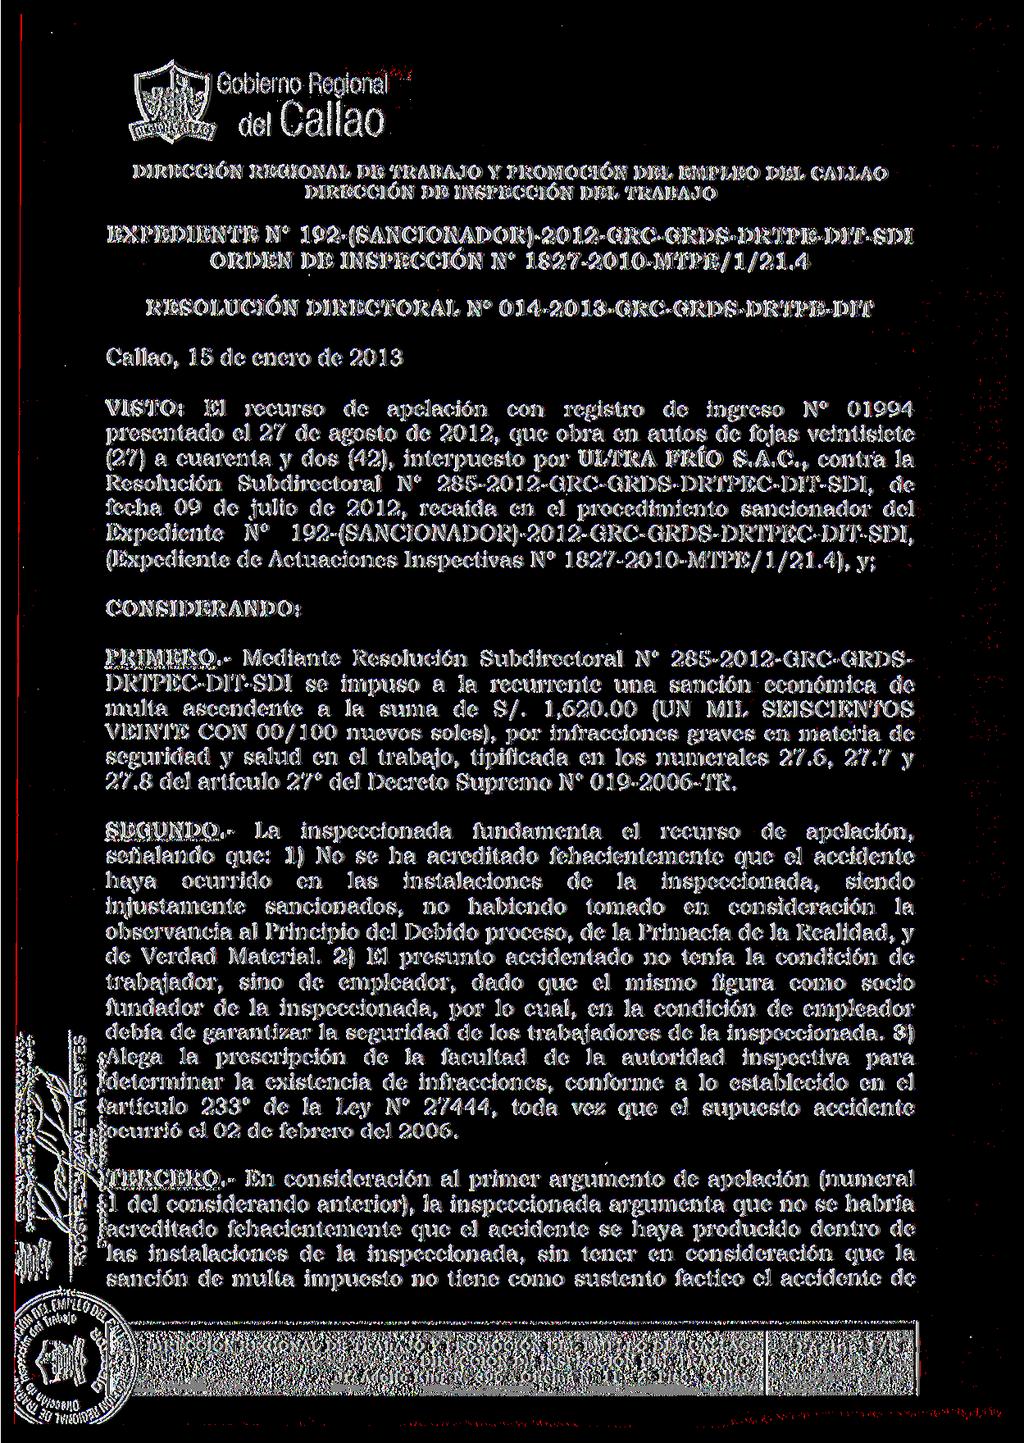 .^rno ft ;i EXPEDIENTE N 192-(SANCIONADOR)-2012-GRC-GRDS-DRTPE-DIT-SDI ORDEN DE INSPECCIÓN N 1827-2010-MTPE/1/21.